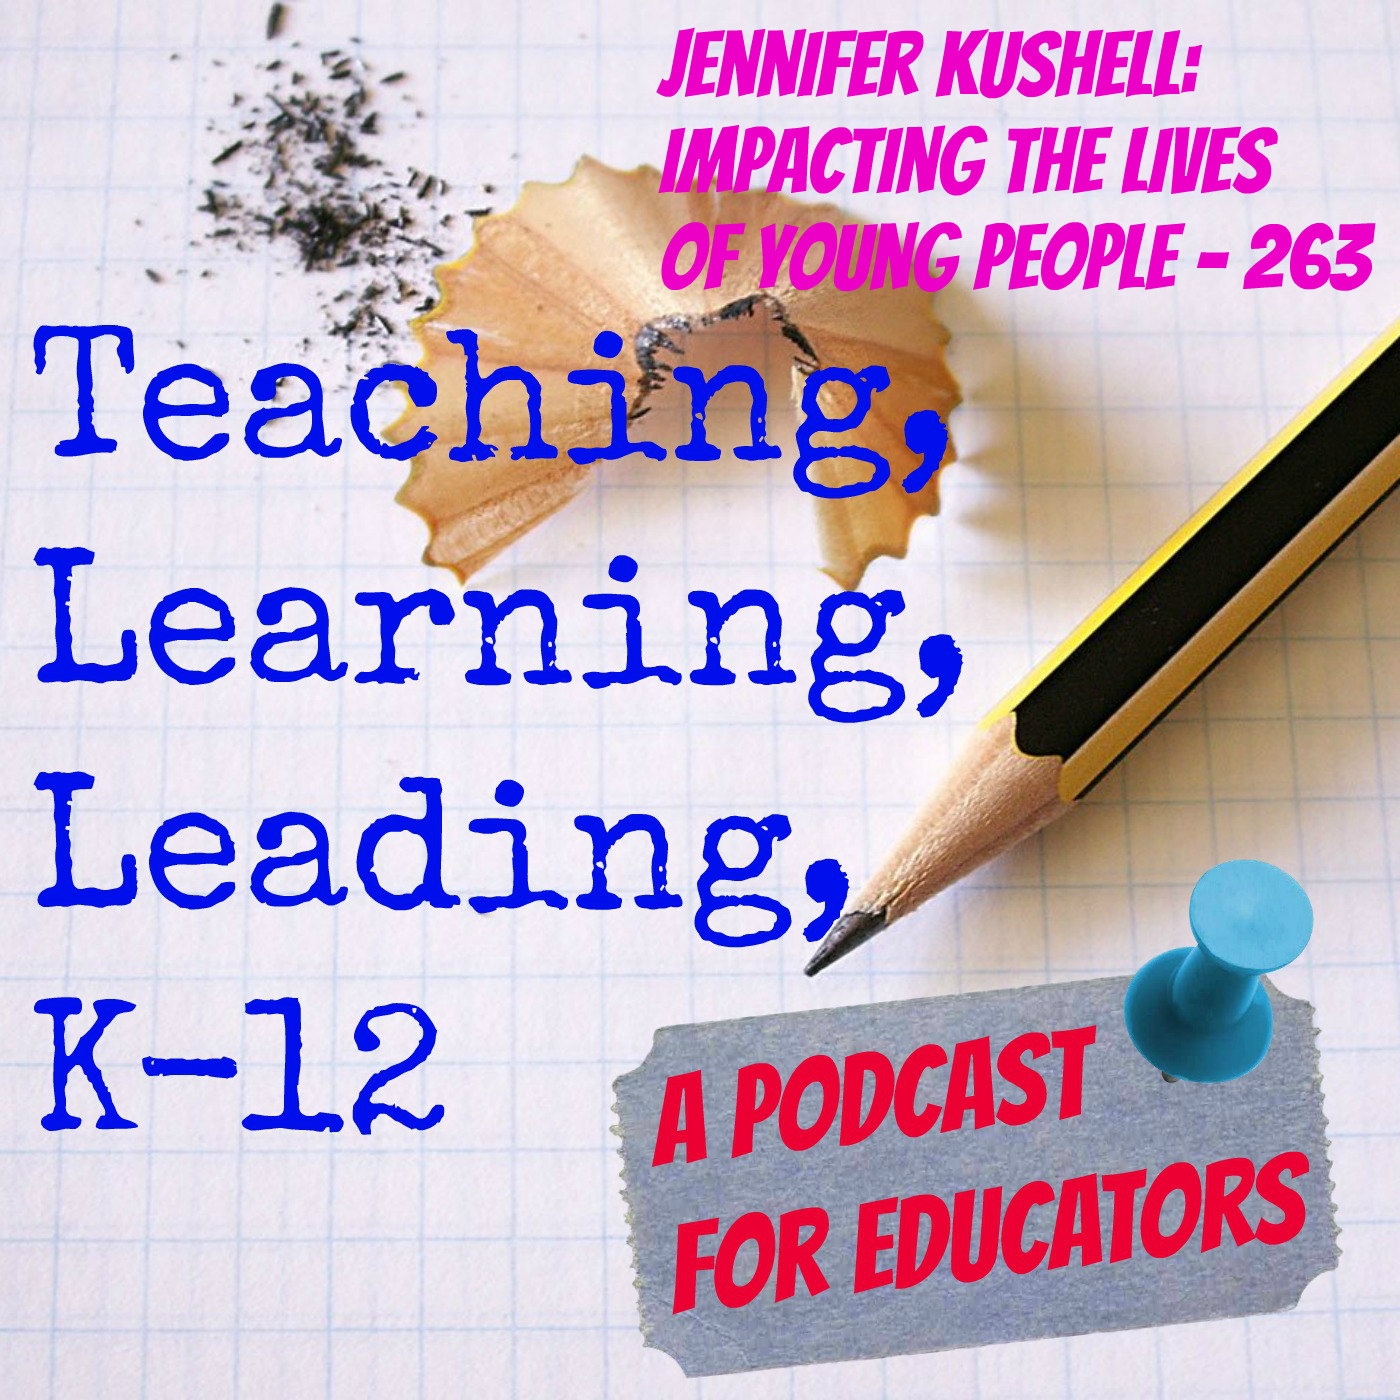 Jennifer Kushell: Impacting the Lives of Young People - 263